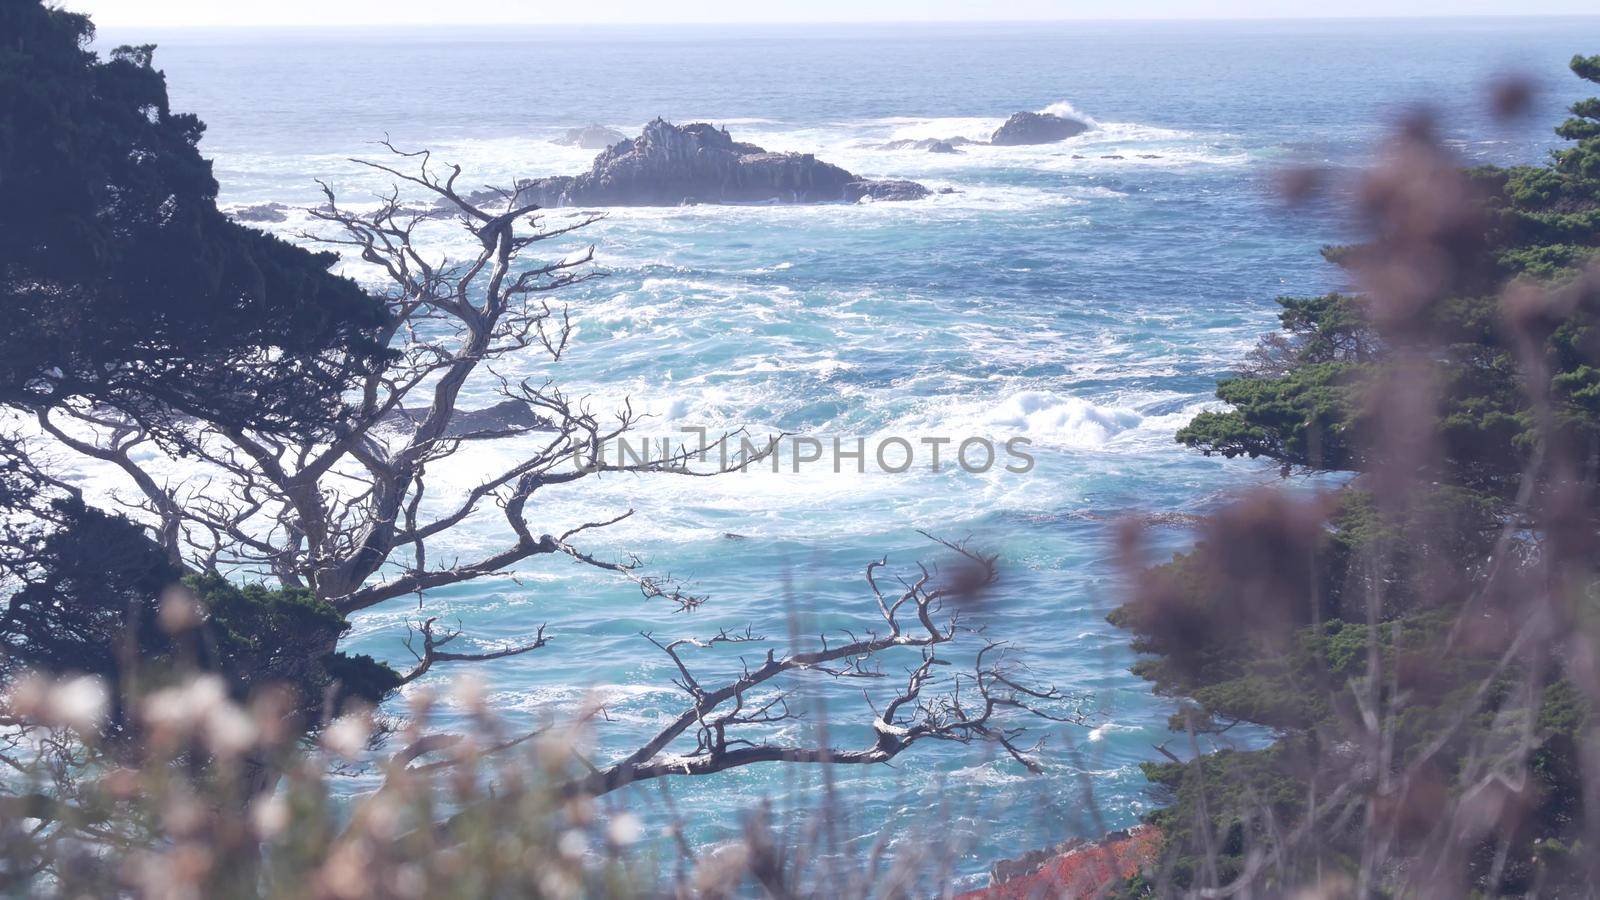 Rock or cliff island, ocean waves crashing, water splashing, sea foam. Big Sur, 17-mile drive, Point Lobos seascape, Monterey, California coast, USA. Coniferous pine cypress forest, bare leafless tree